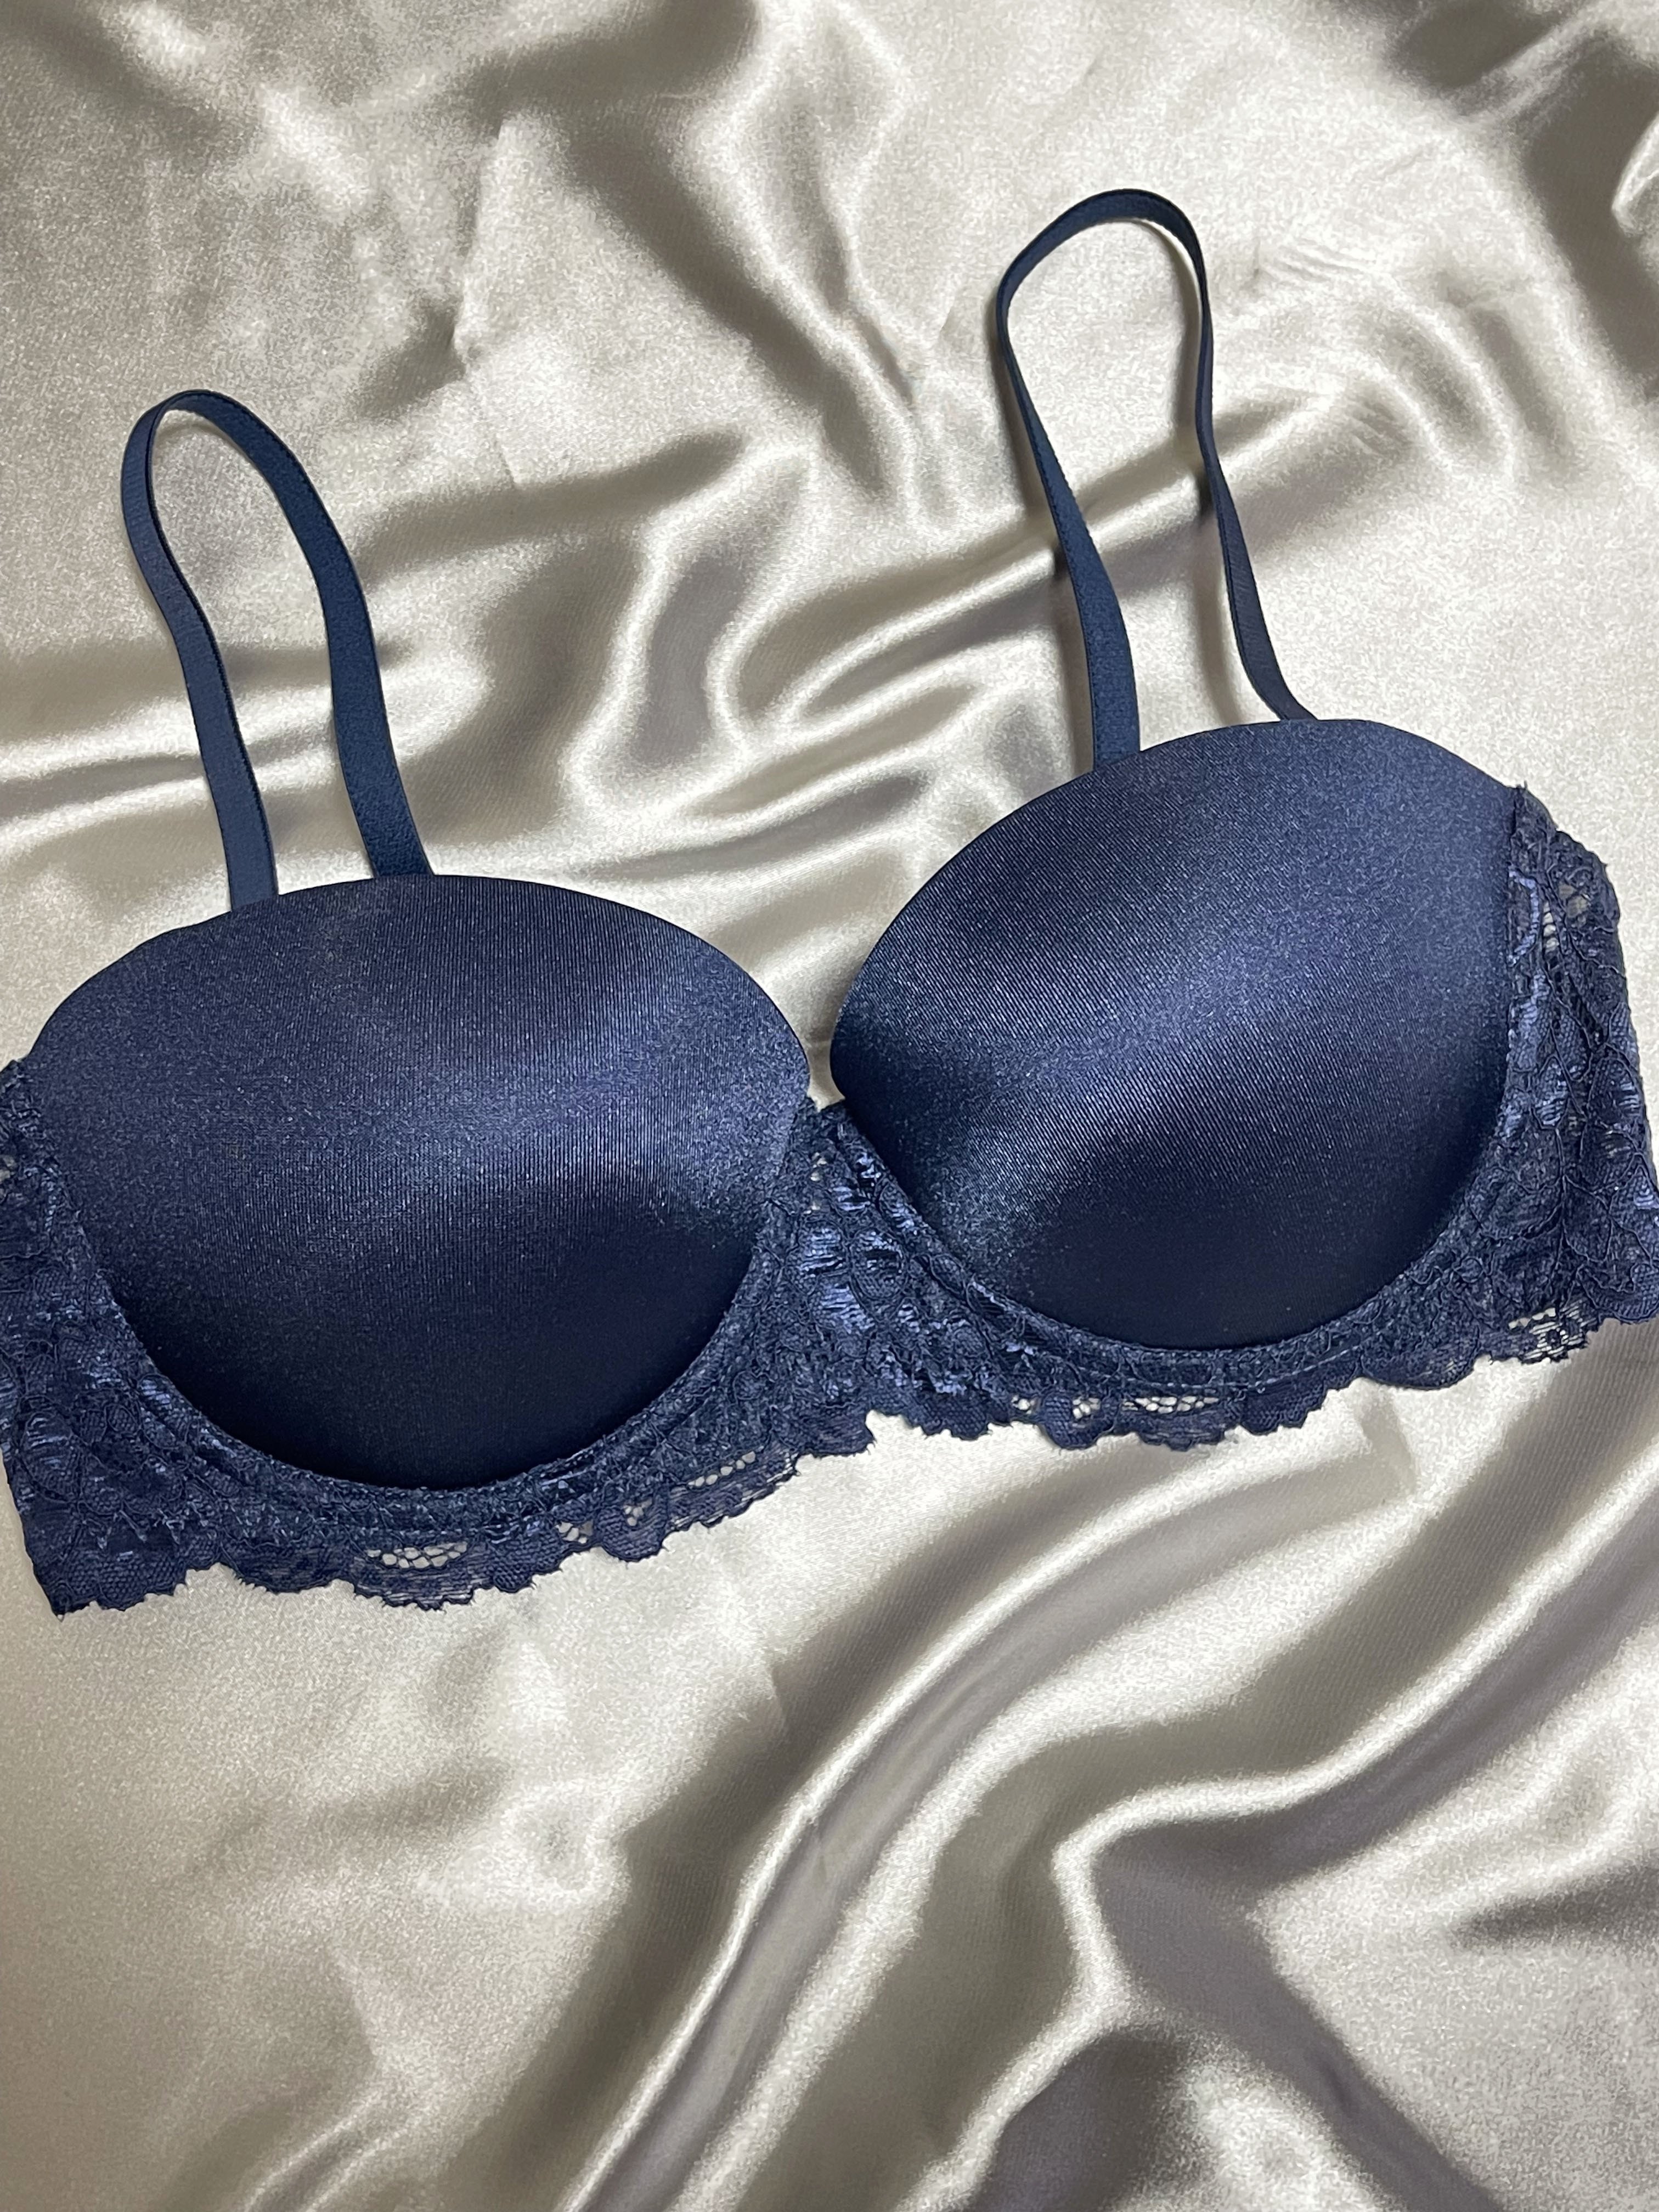 Blue lace push-up bra, Bras, Women'secret